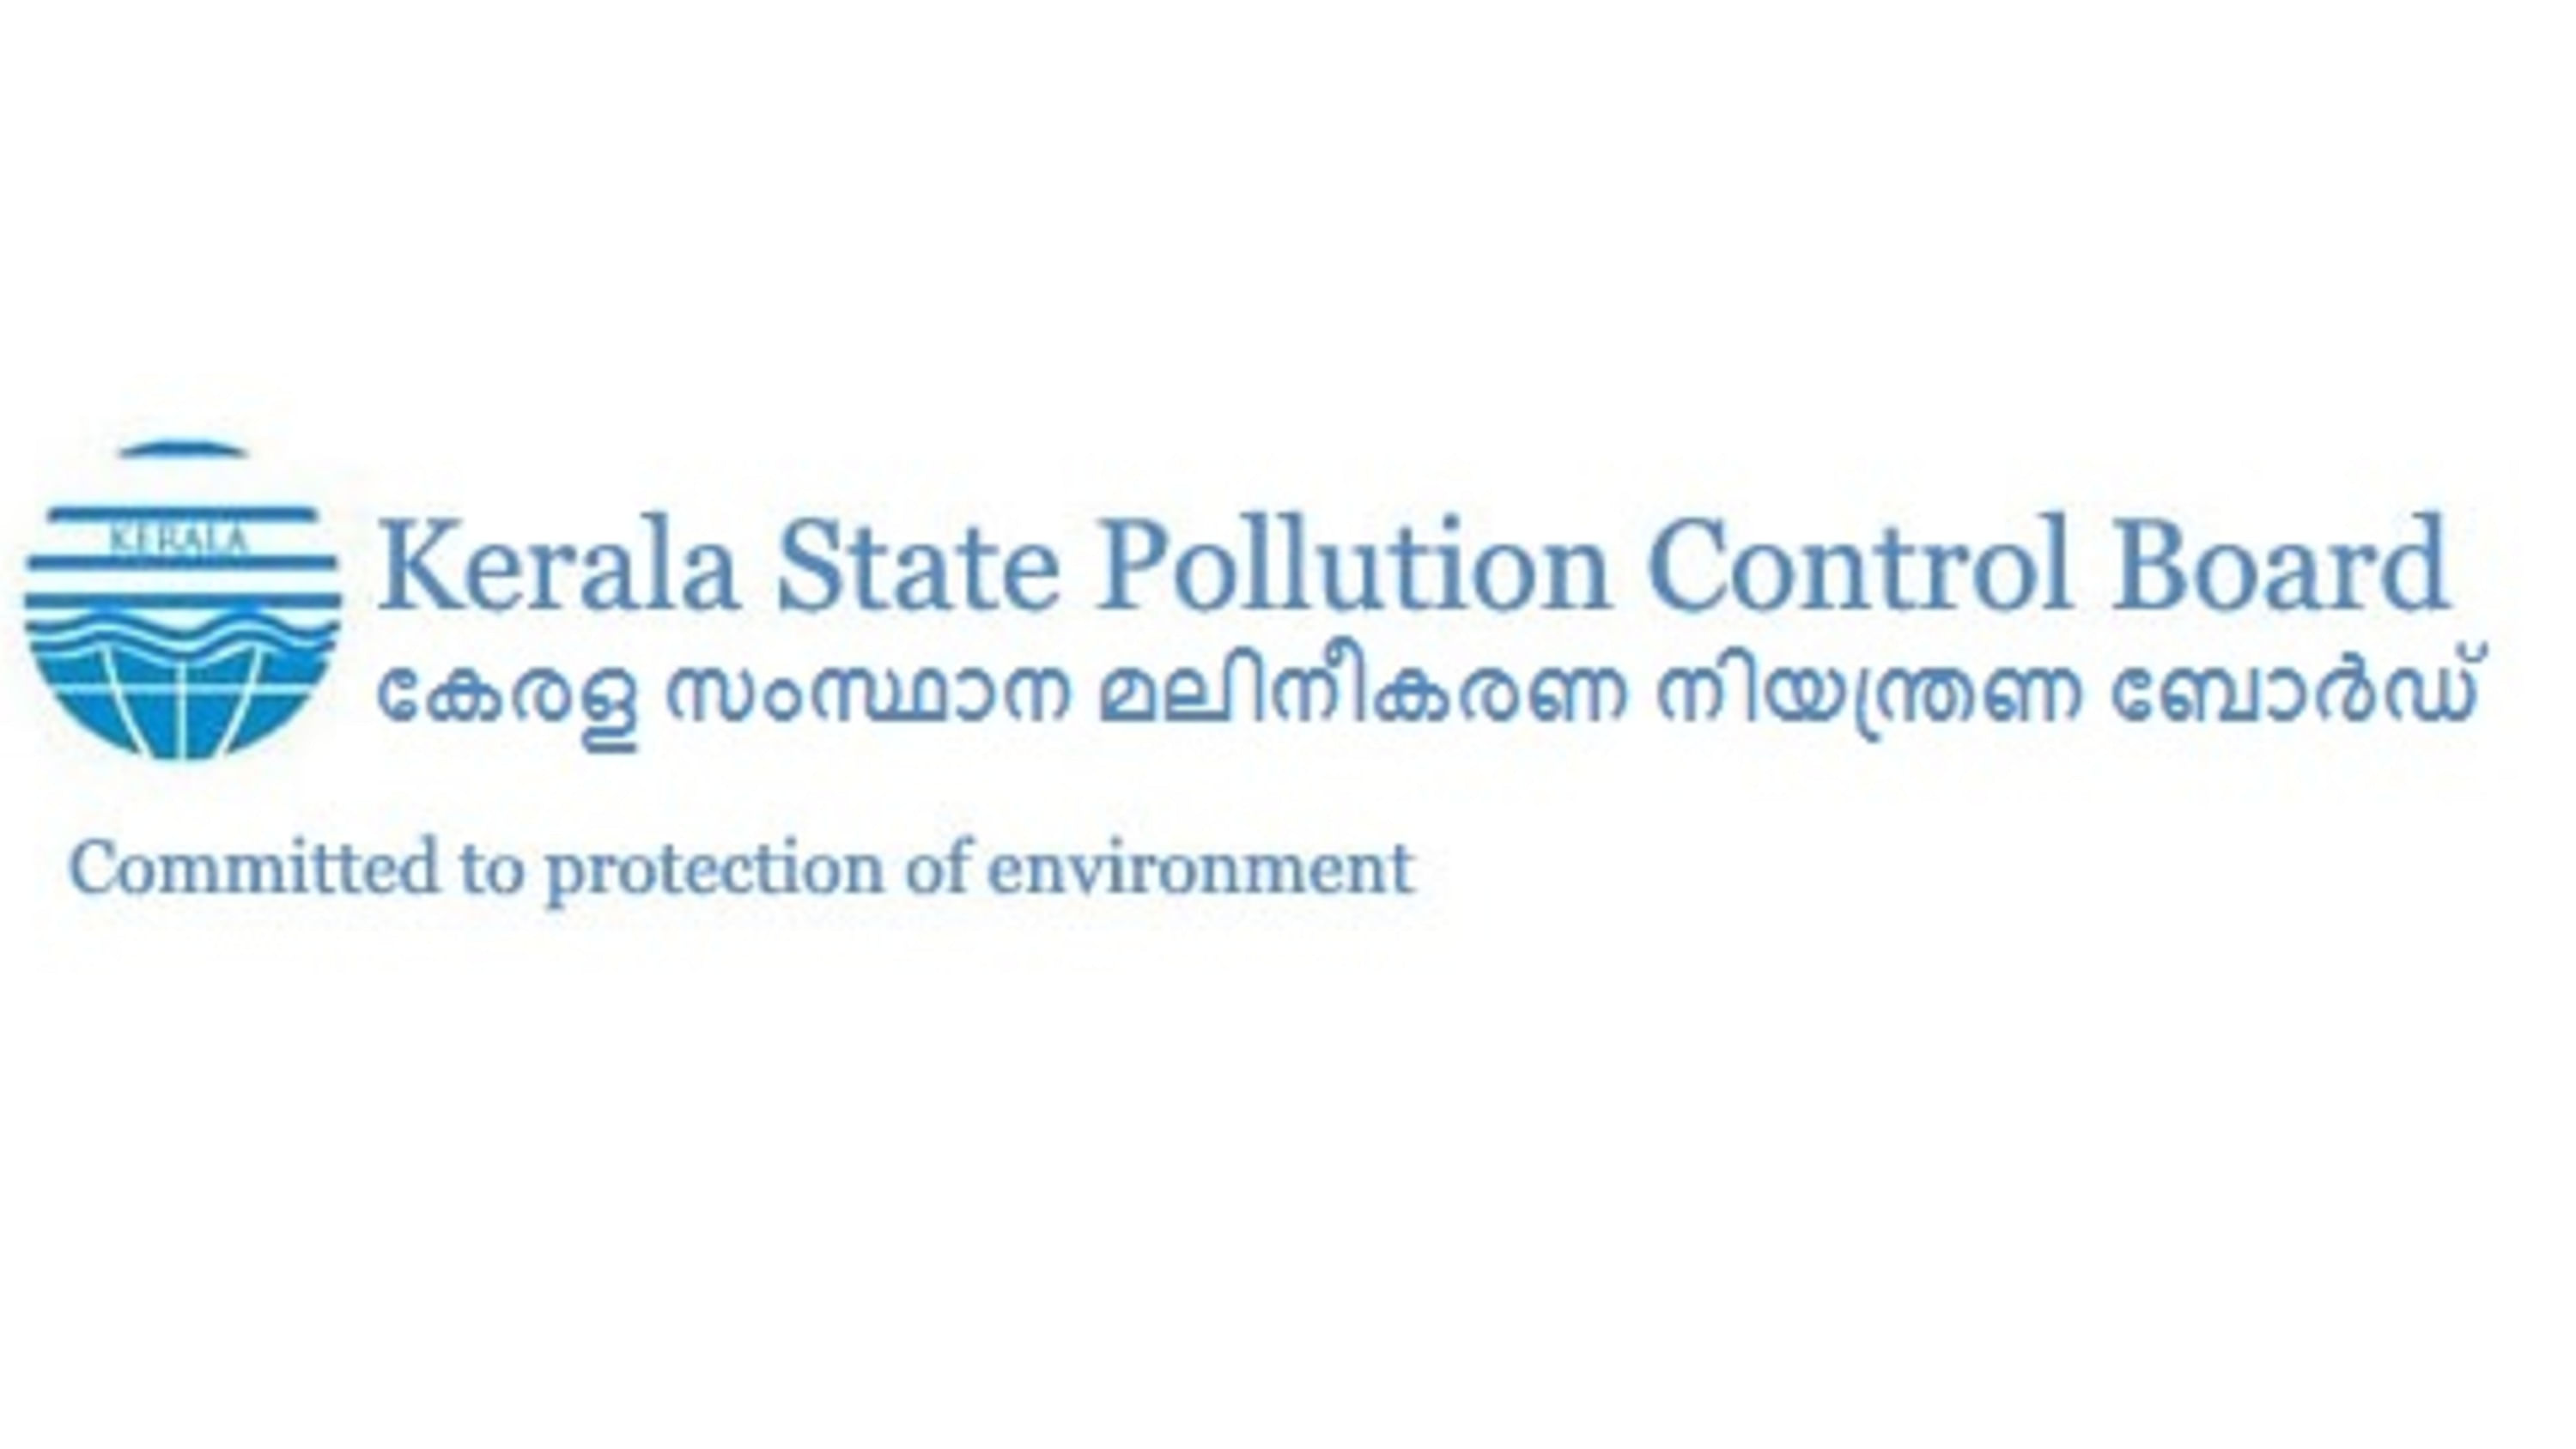 Kerala State Pollution Control Board (Image: KSPCB website)